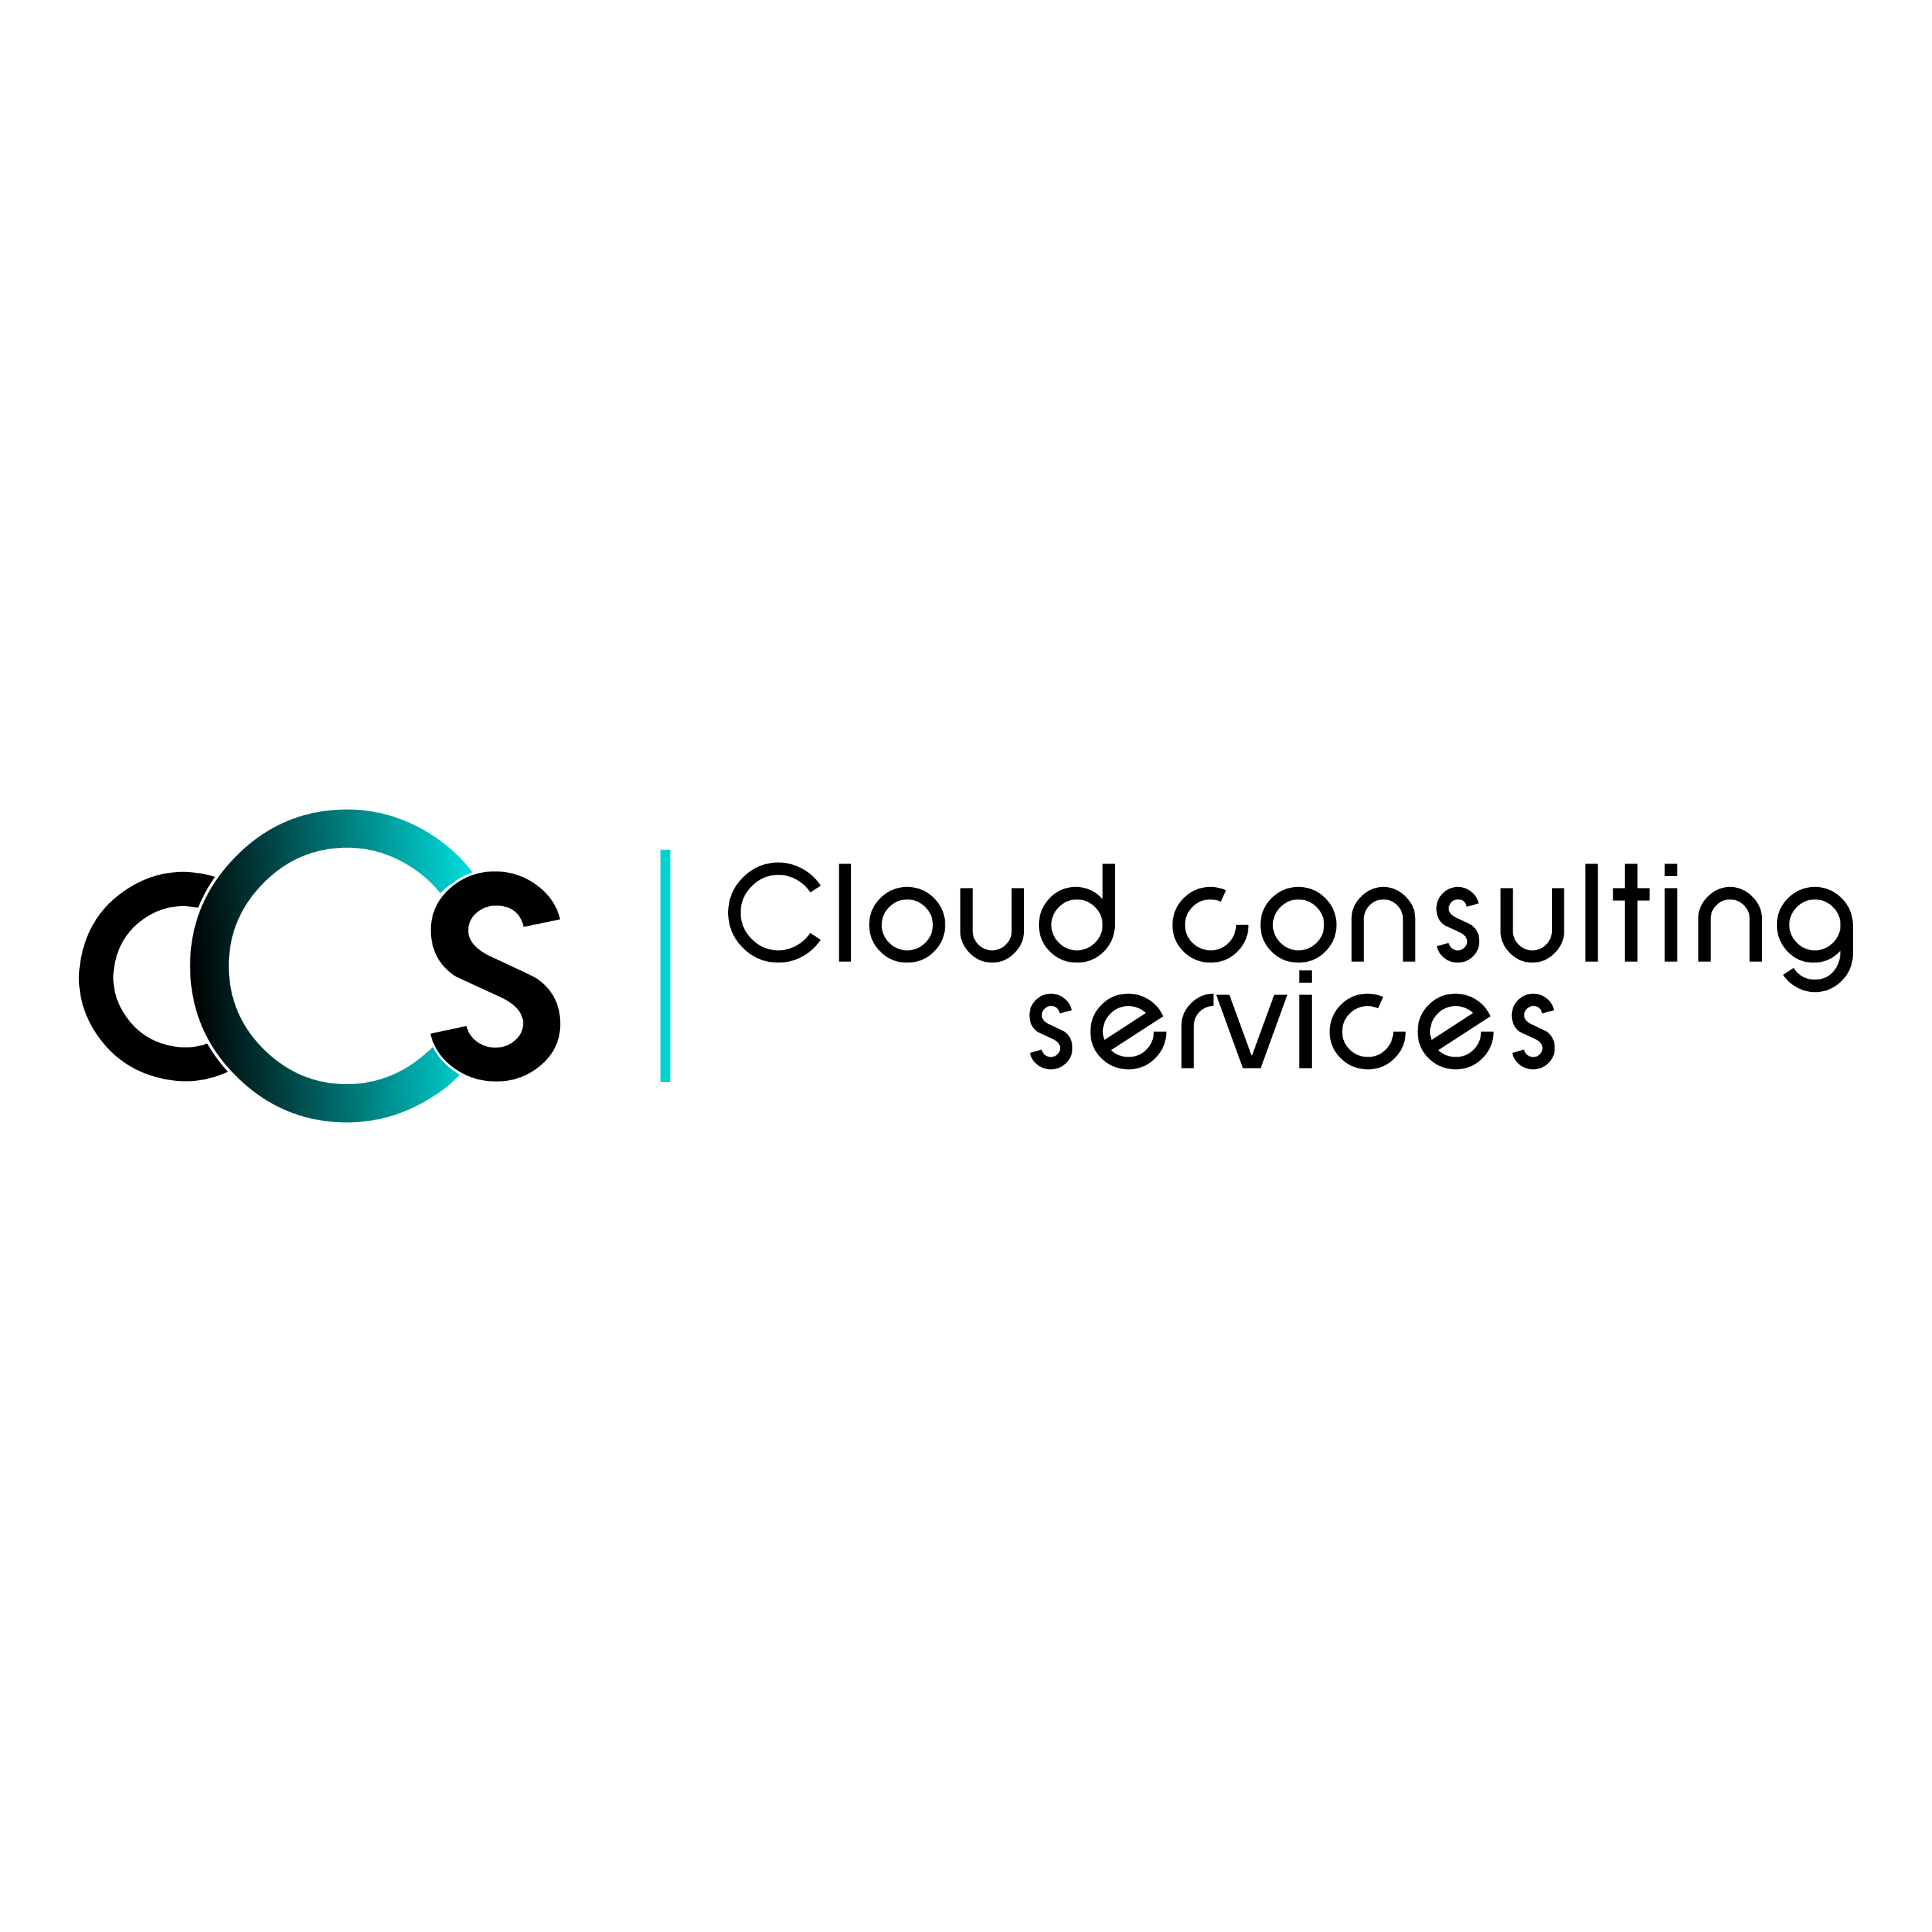 Ccs Propuesta de creación de Logo-03